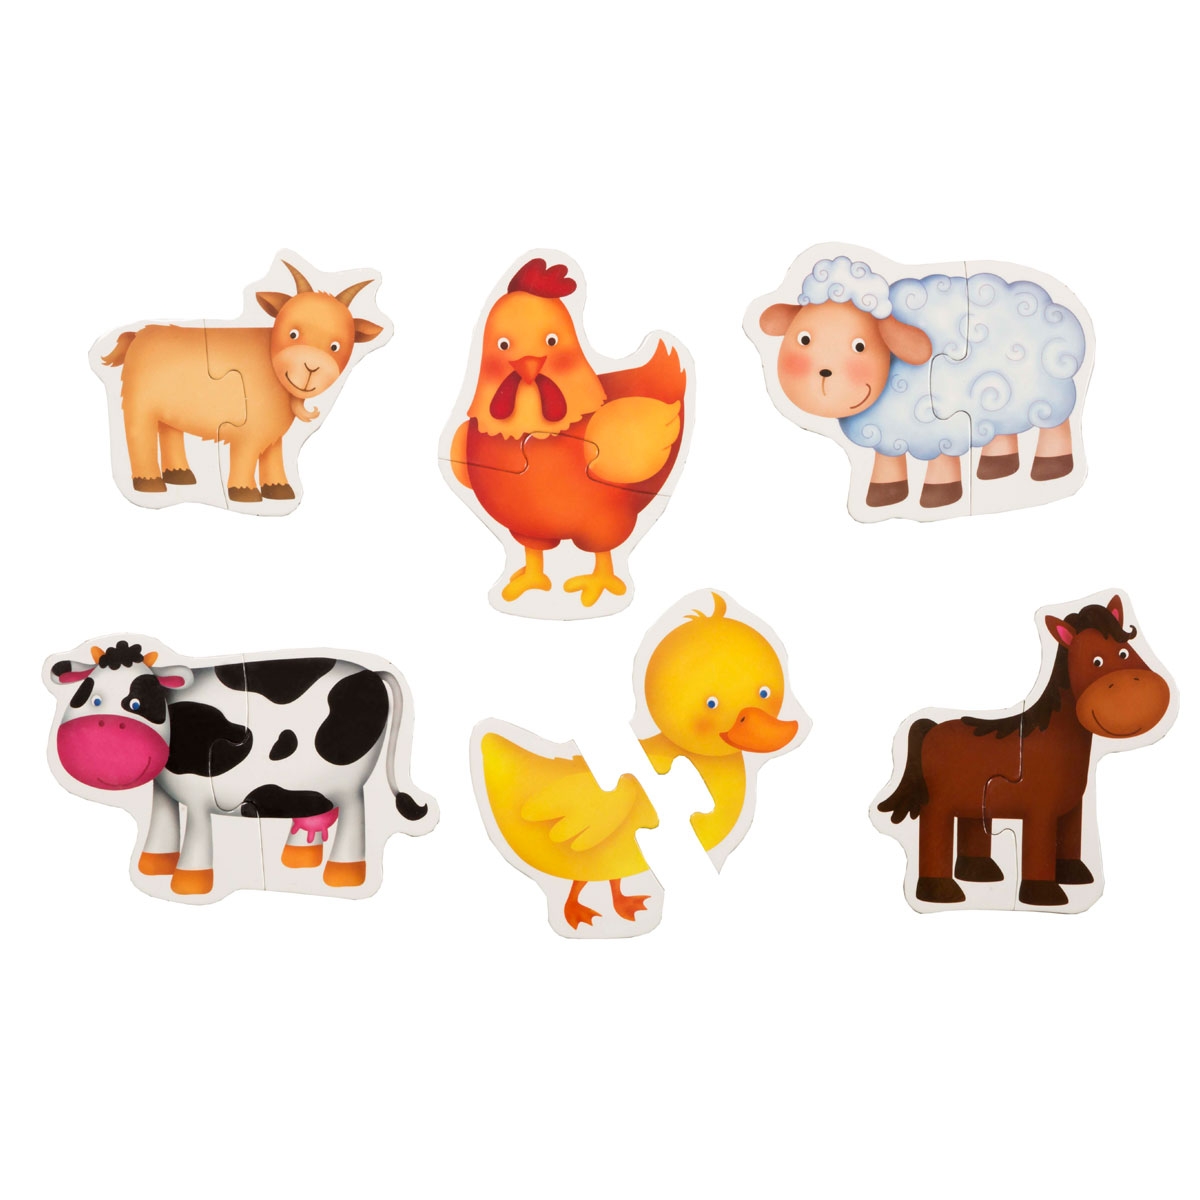 Baby Puzzle - Farm Animals